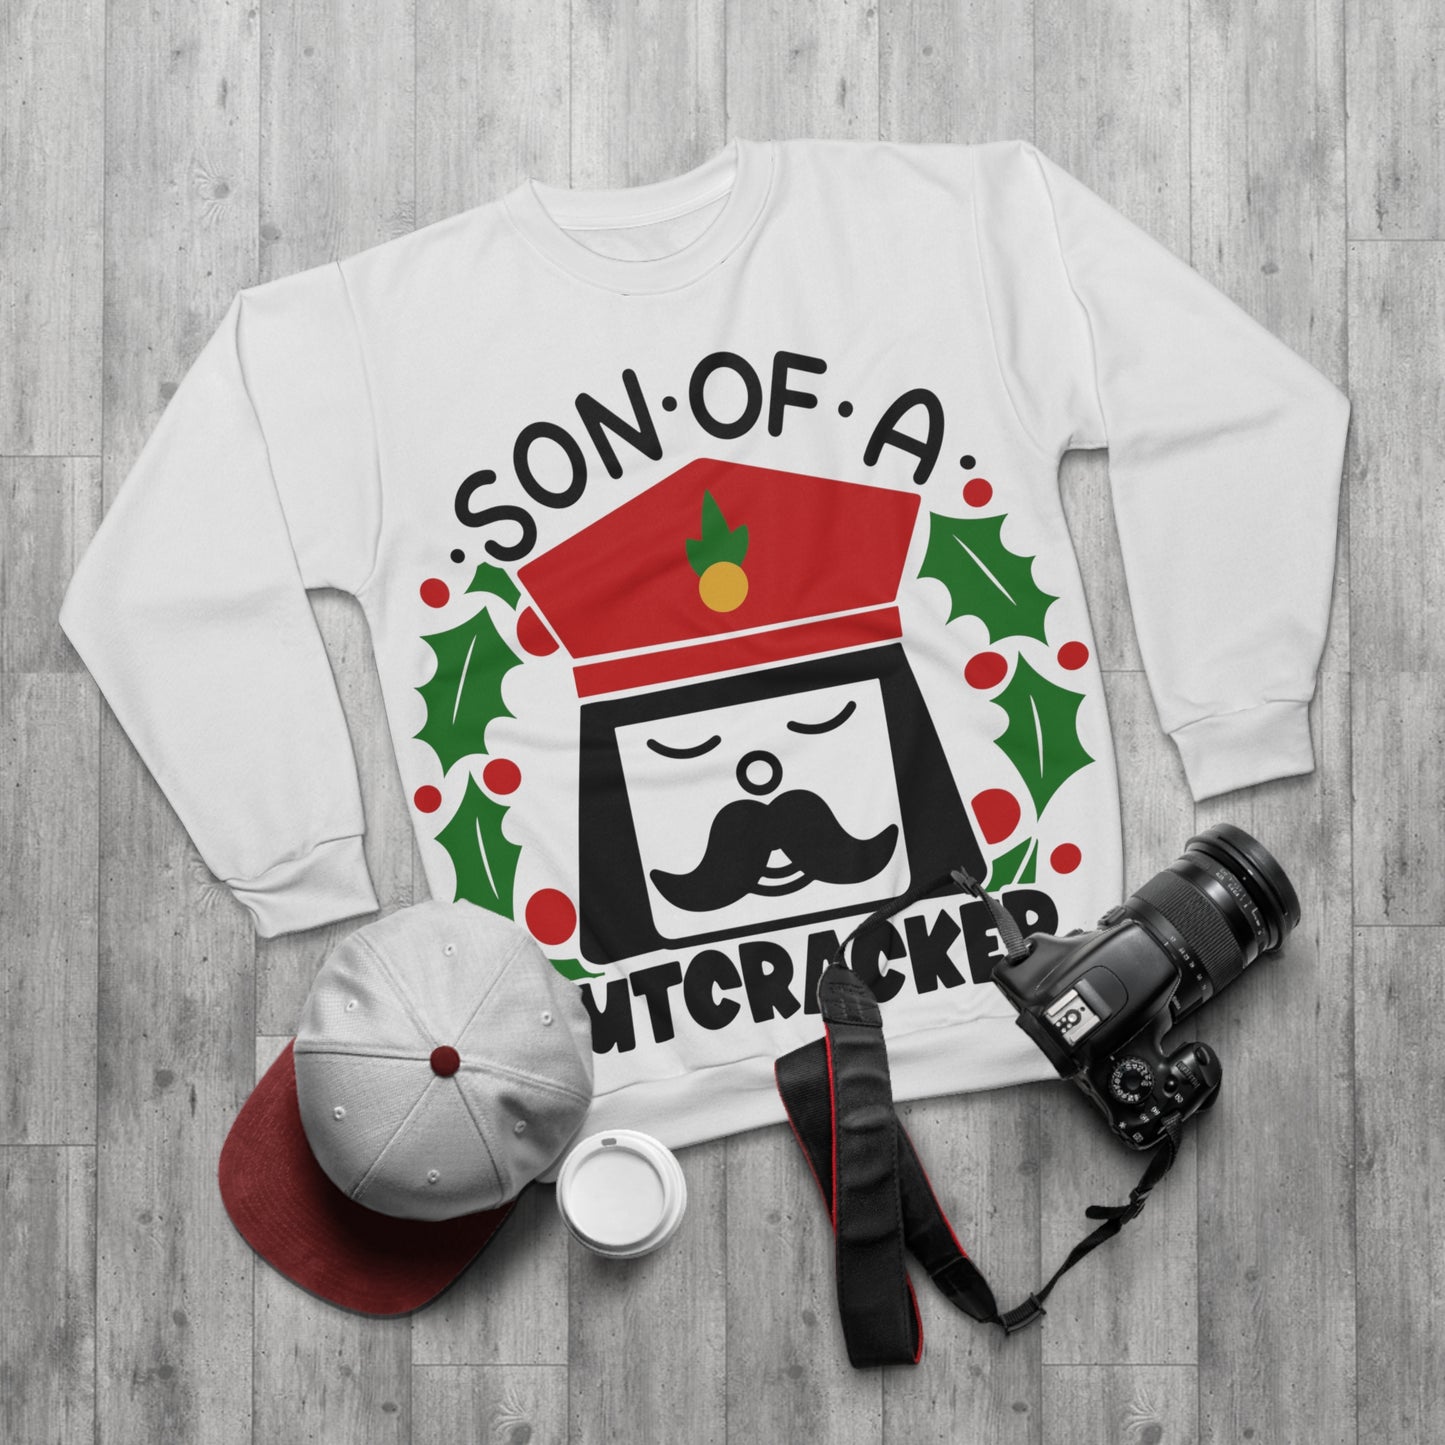 Son Of A Nutcracker Unisex Sweatshirt, Nutcracker Holiday Shirt, Ugly Sweatshirt, Elf Christmas Shirt, Xmas Tee, Ugly Christmas Tee